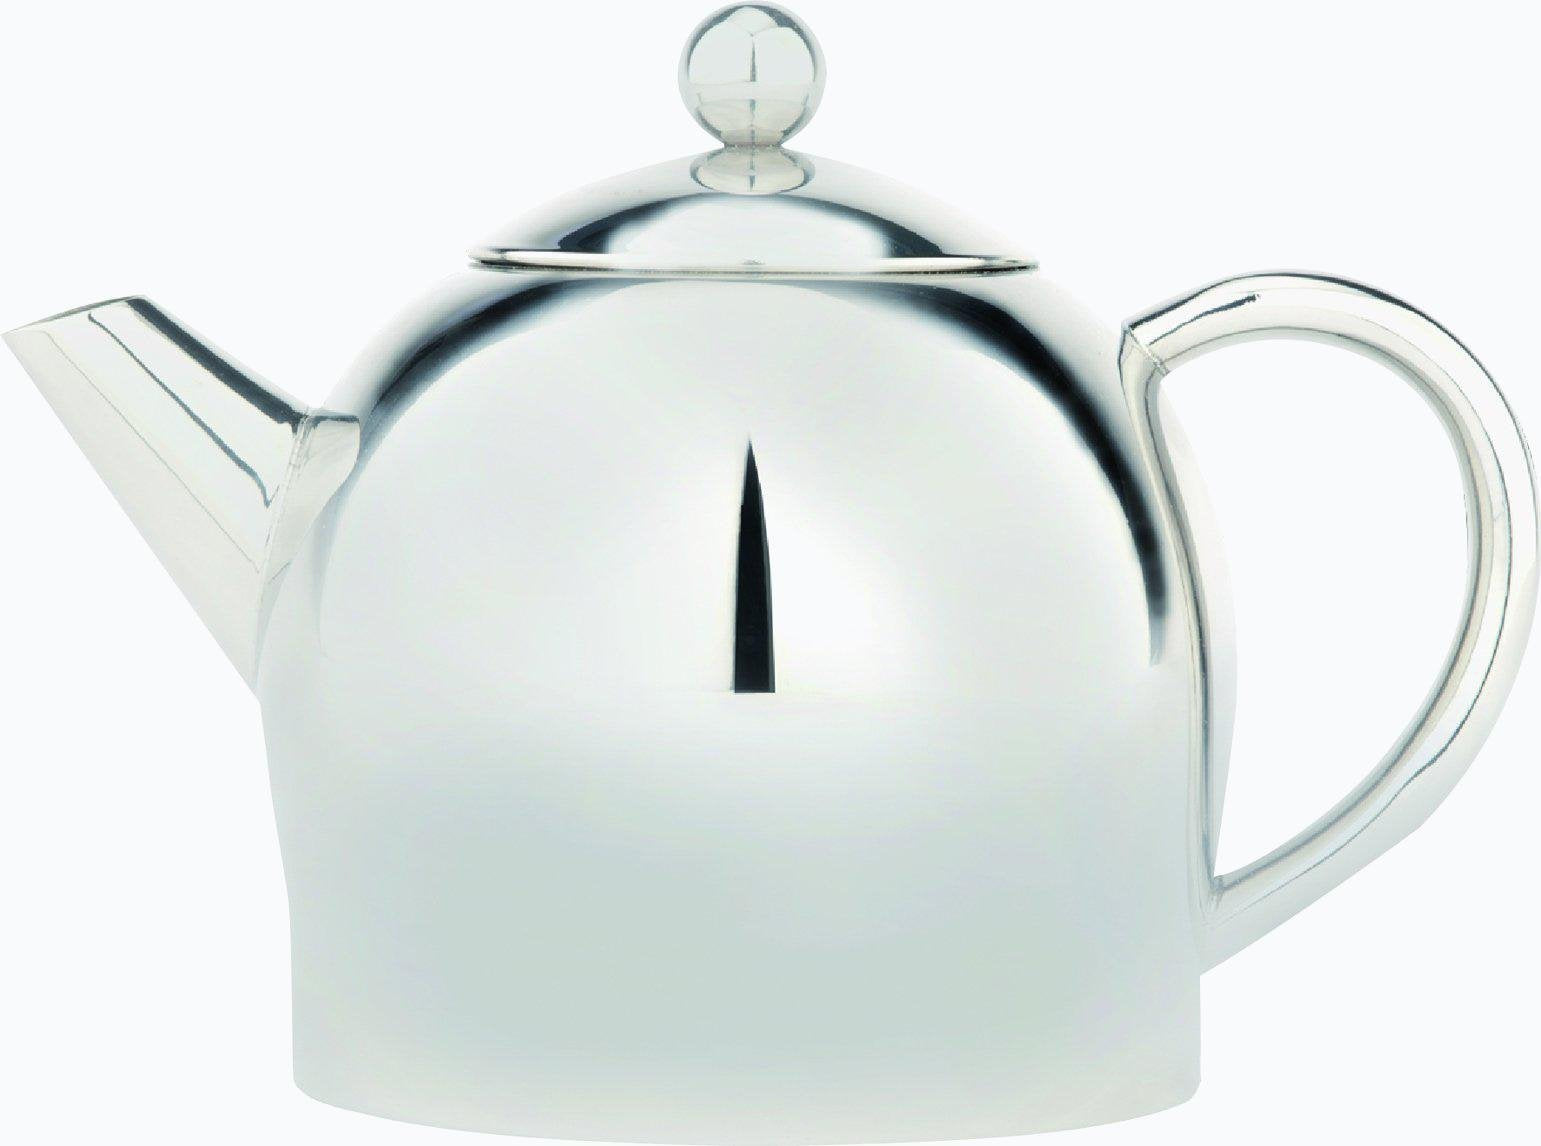 Williams-Sonoma Brasserie White Coffee/Teapot, Creamer, Sugar Bowl 3 Pc Set